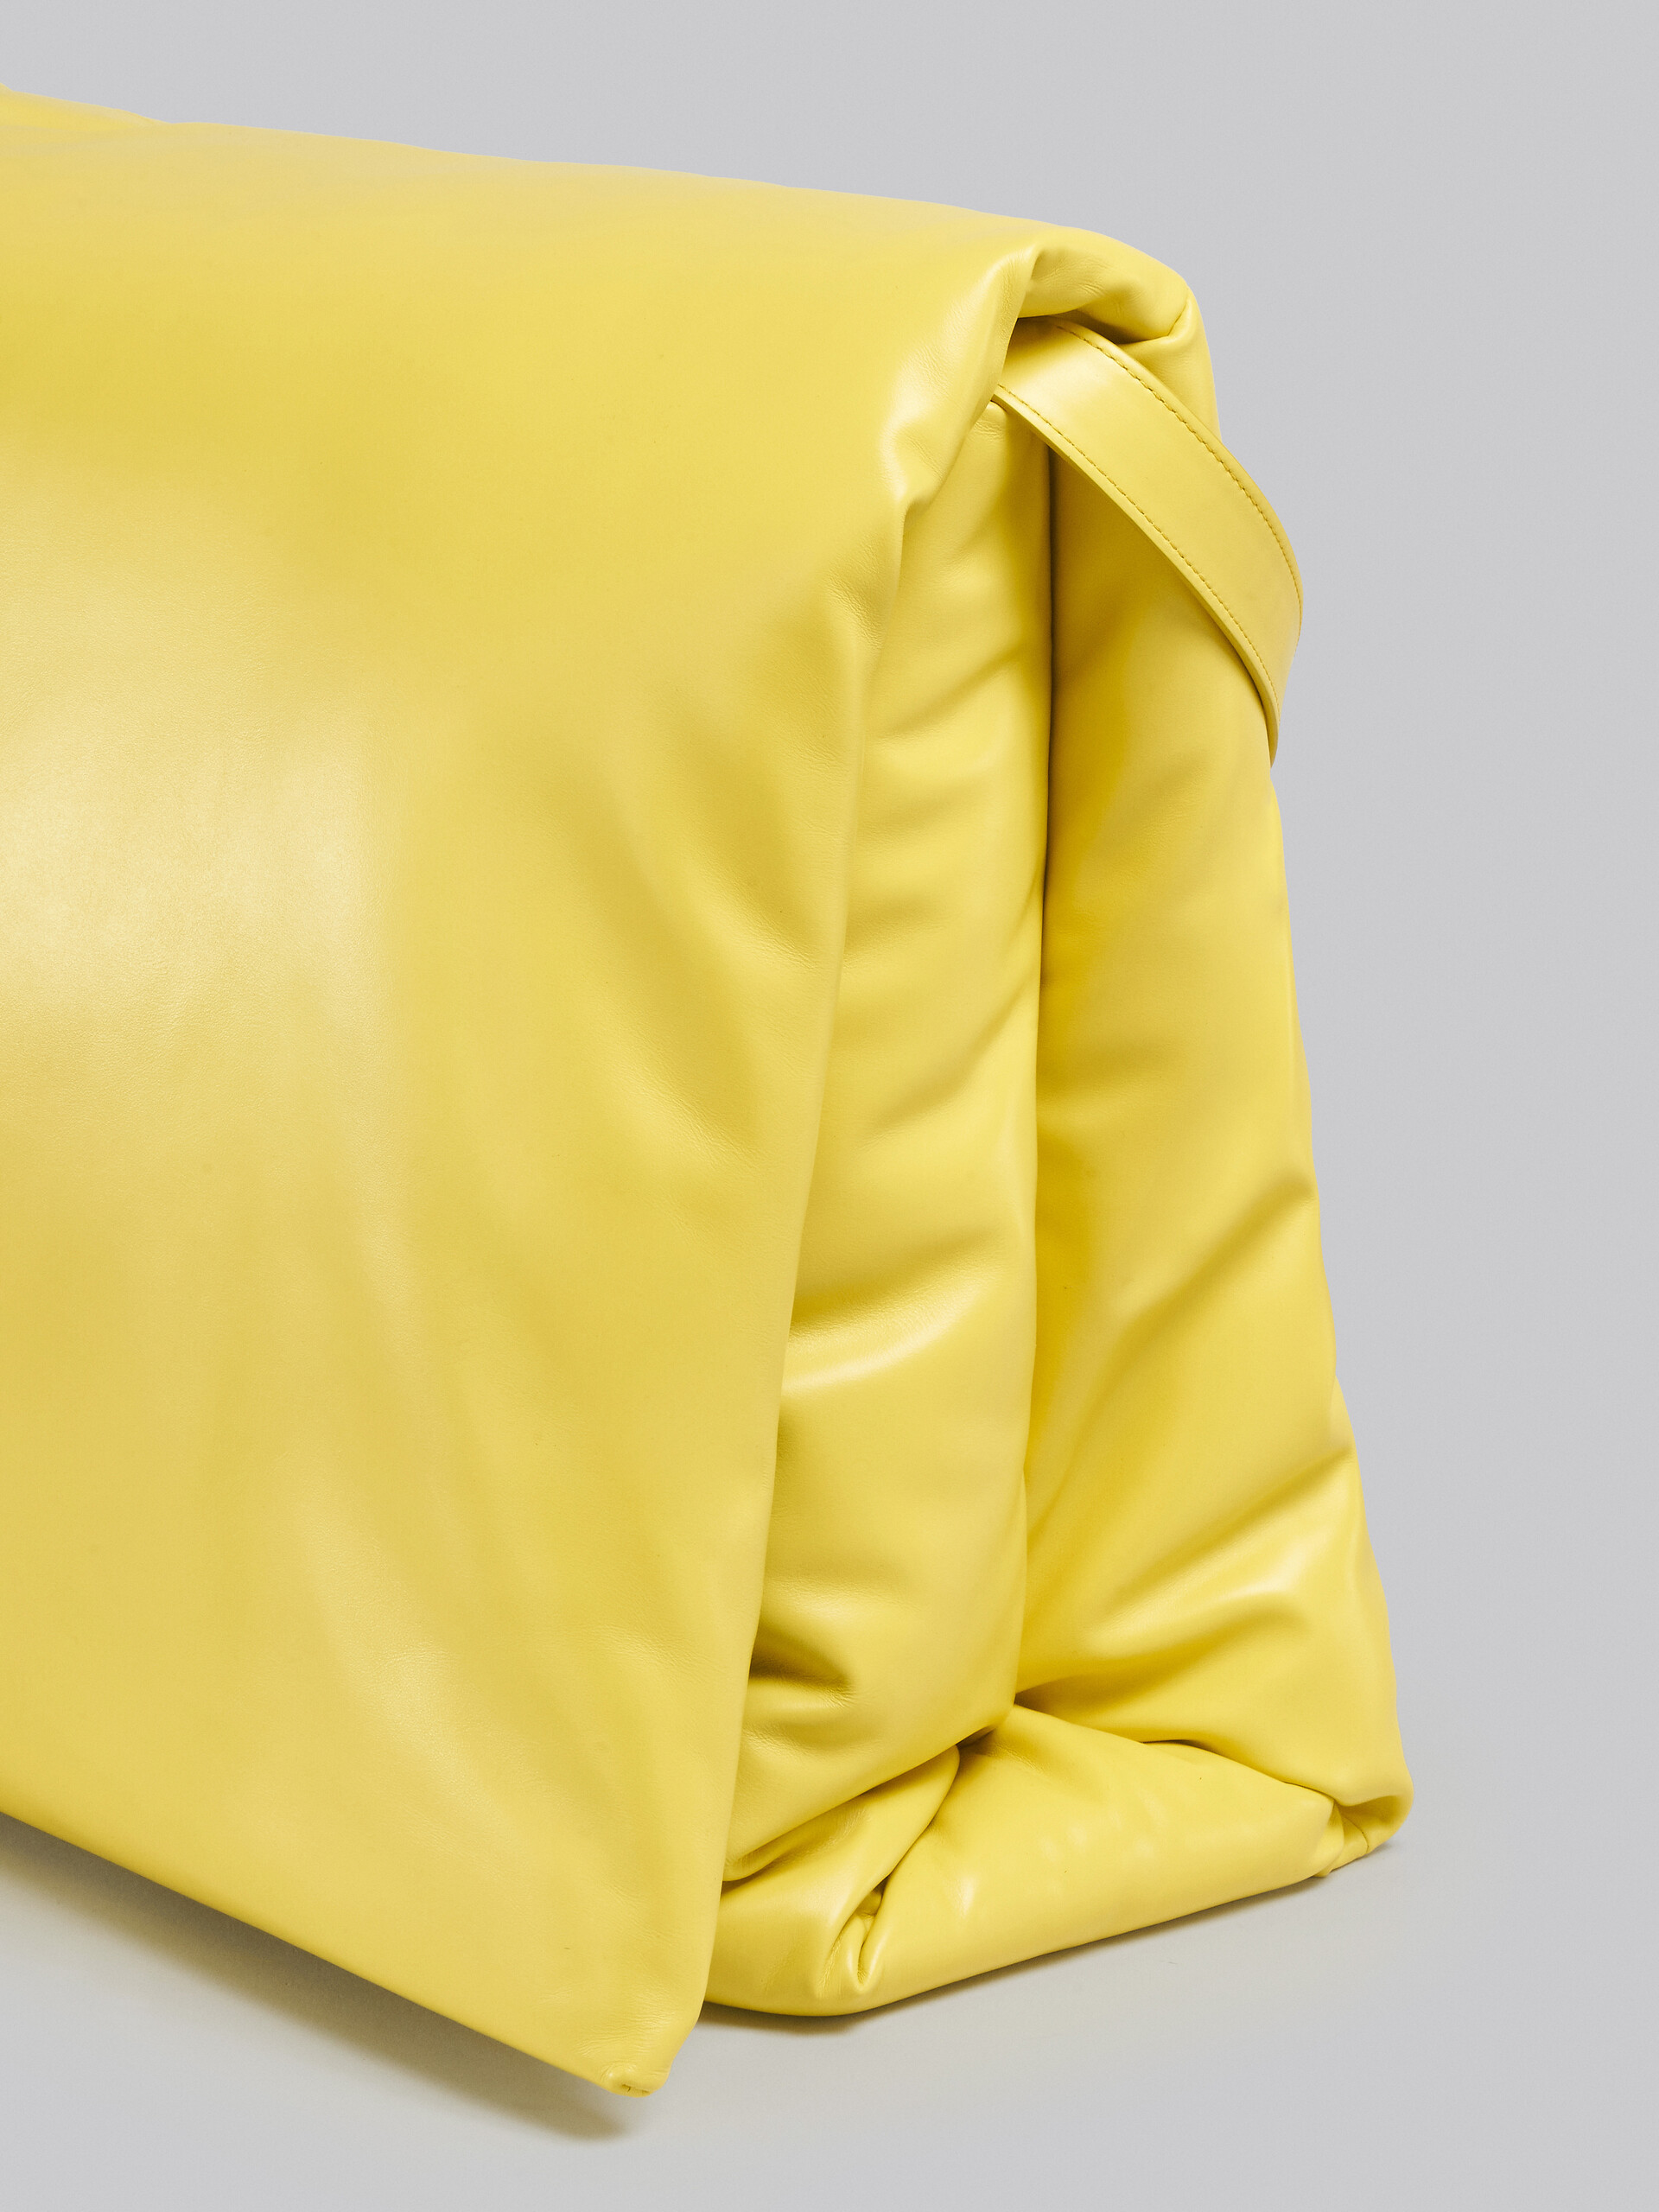 Maxi yellow calsfkin Prisma bag - Shoulder Bag - Image 5